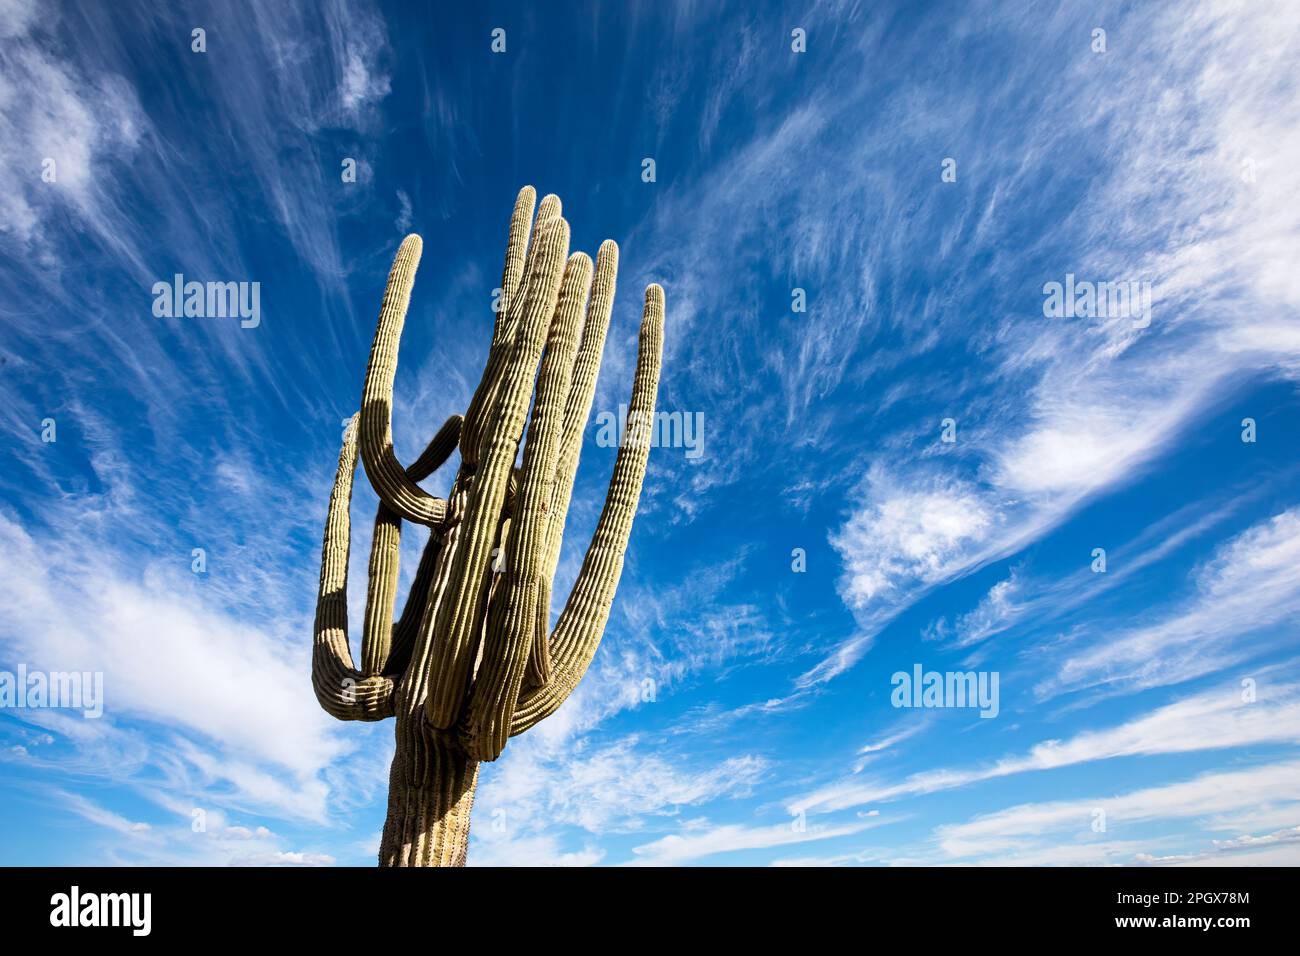 Riesen-Saguaro gegen den Himmel, McDowell Sonoran Preserve, Scottsdale, Arizona, USA. Stockfoto